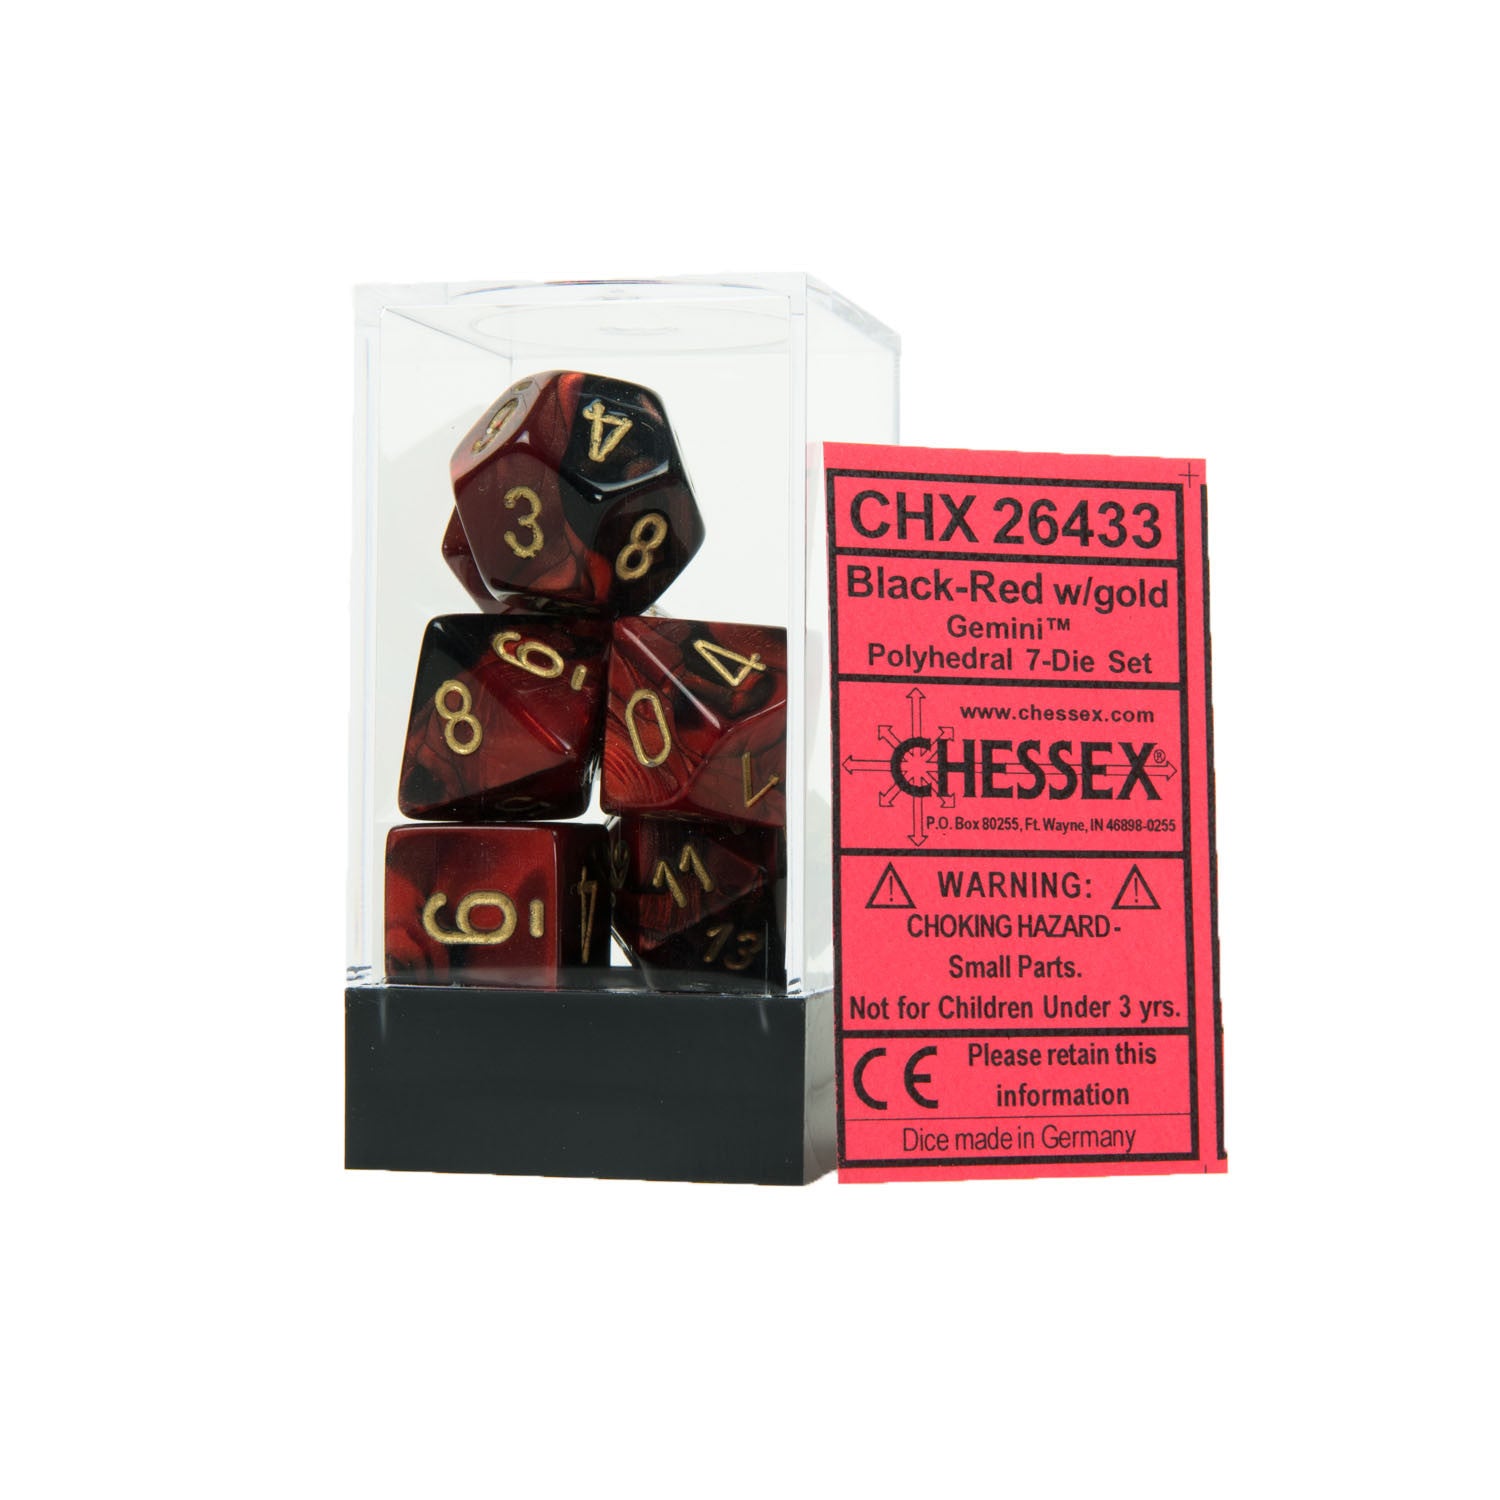 Chessex CHX26433 Black-Red w/gold Gemini™ Polyhedral Dice Set